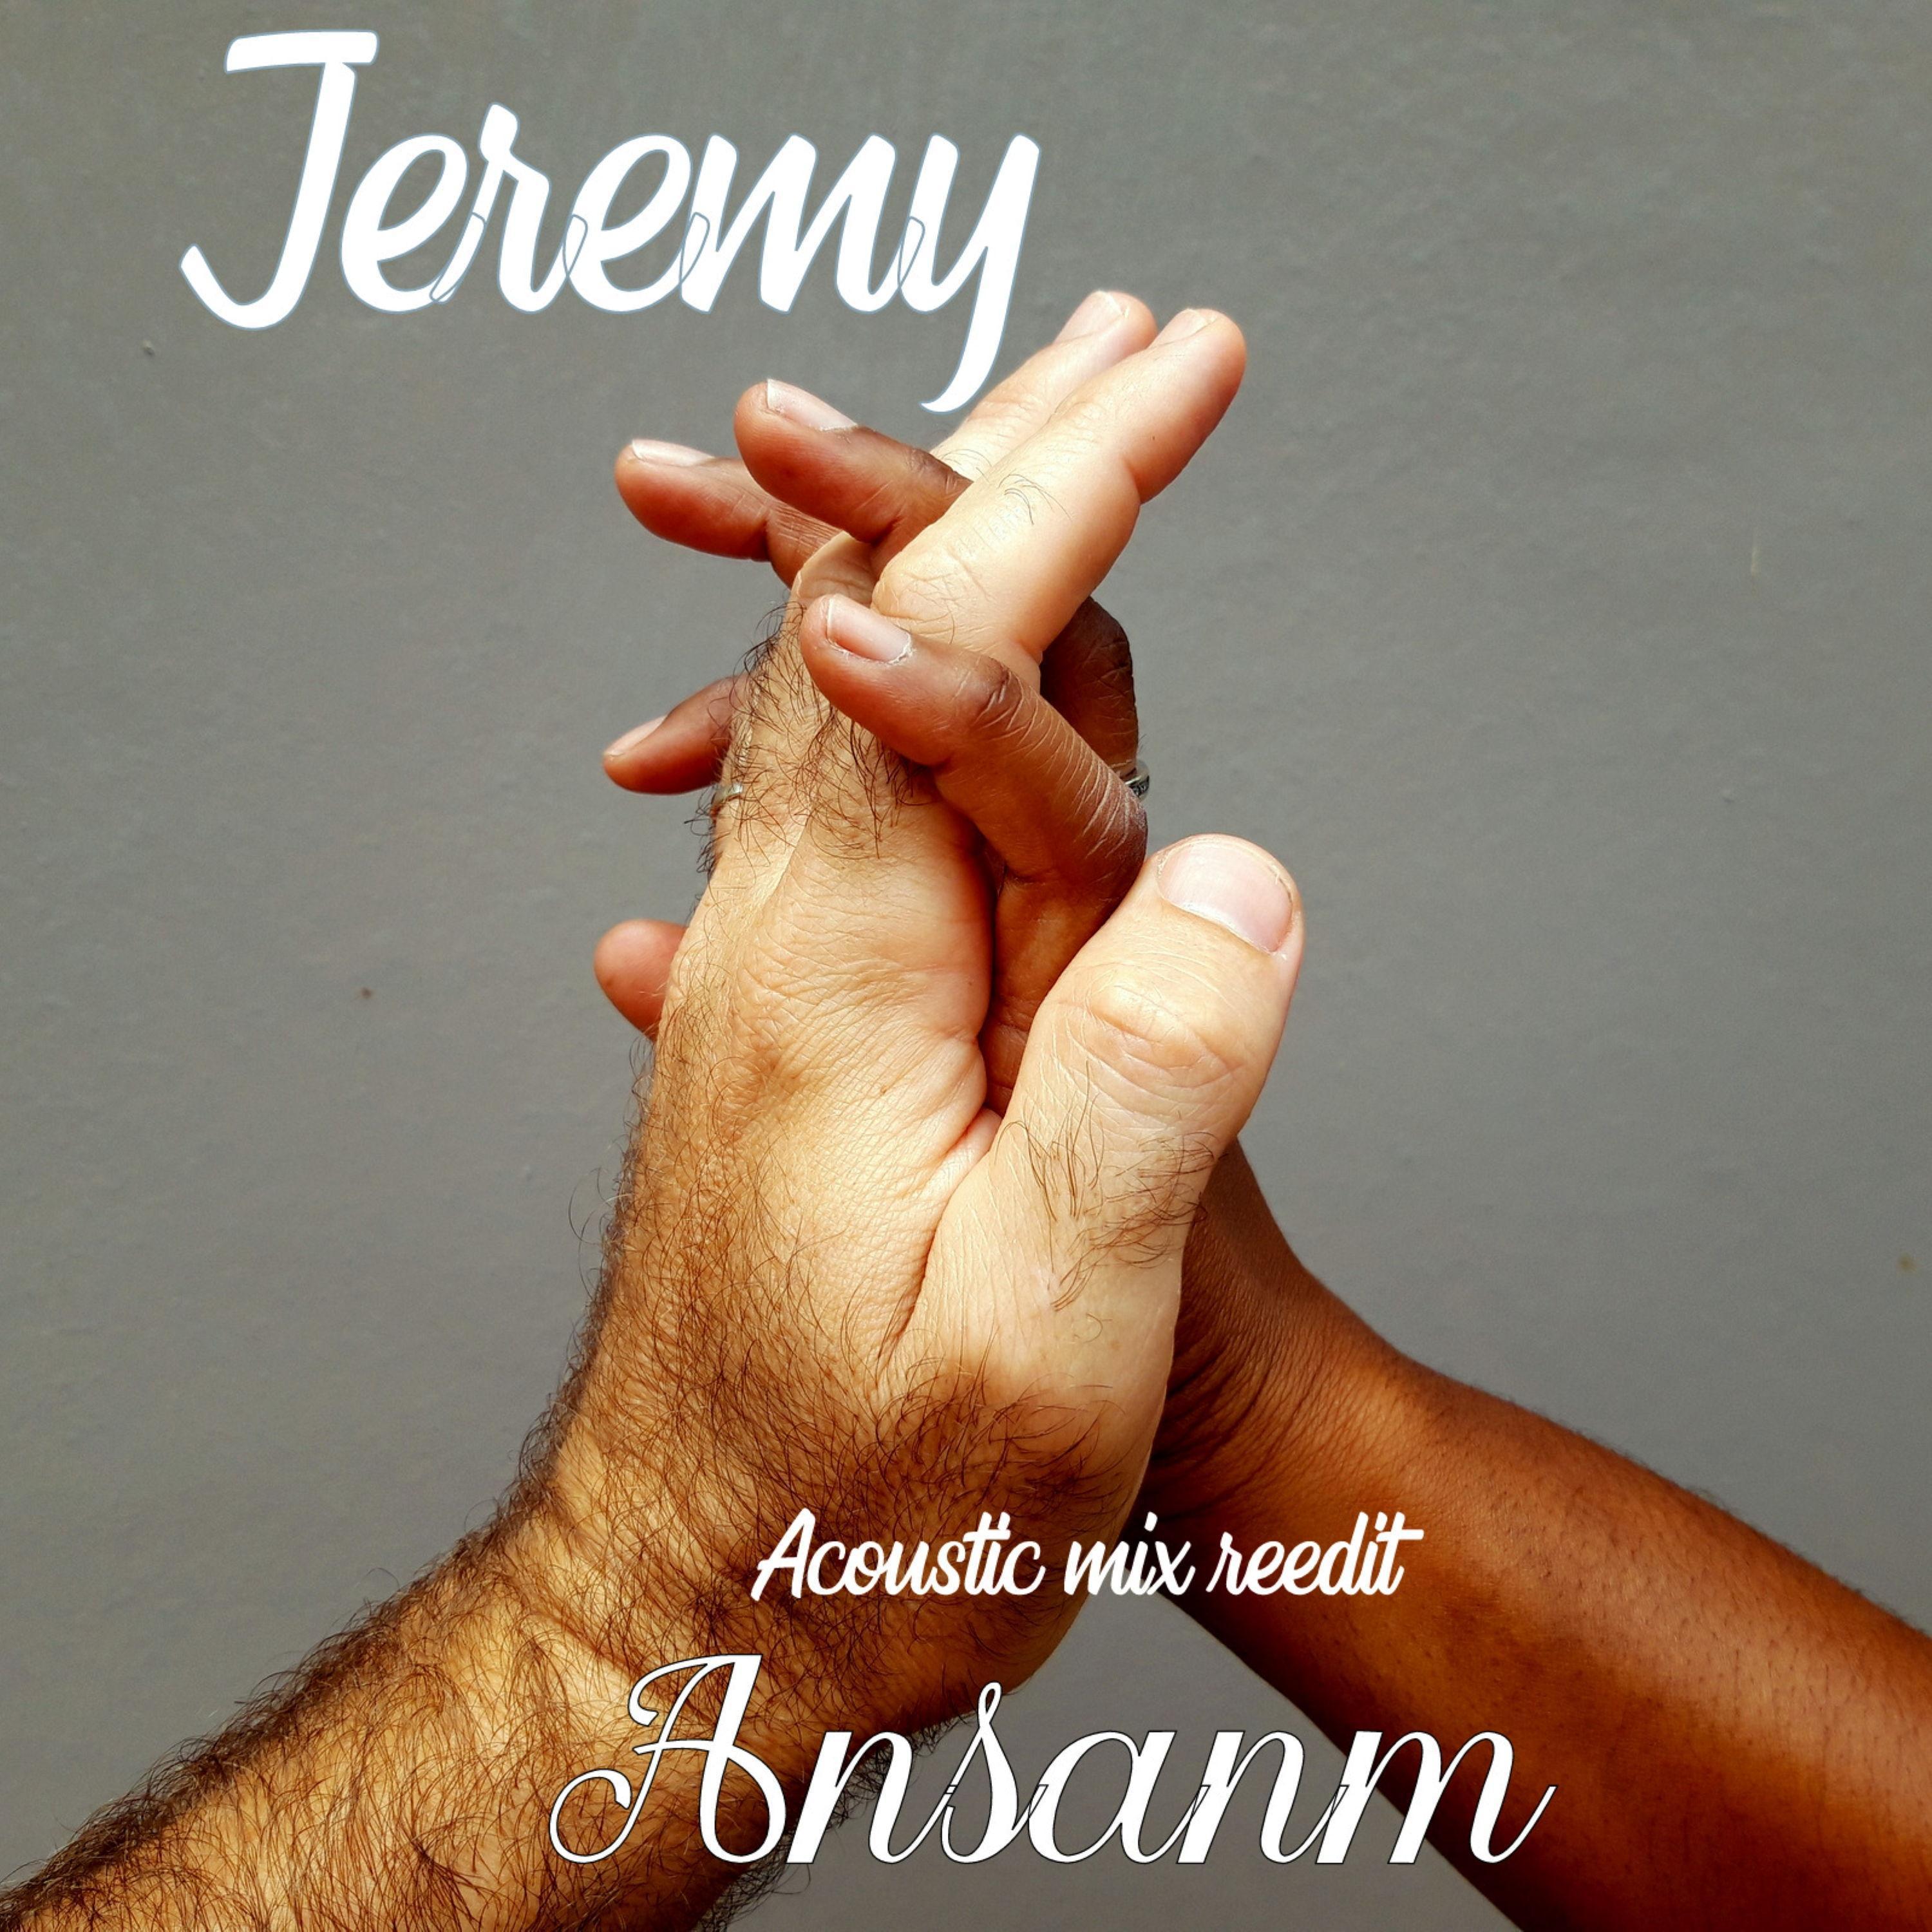 Jeremy - ANSANM (acoustic mix)